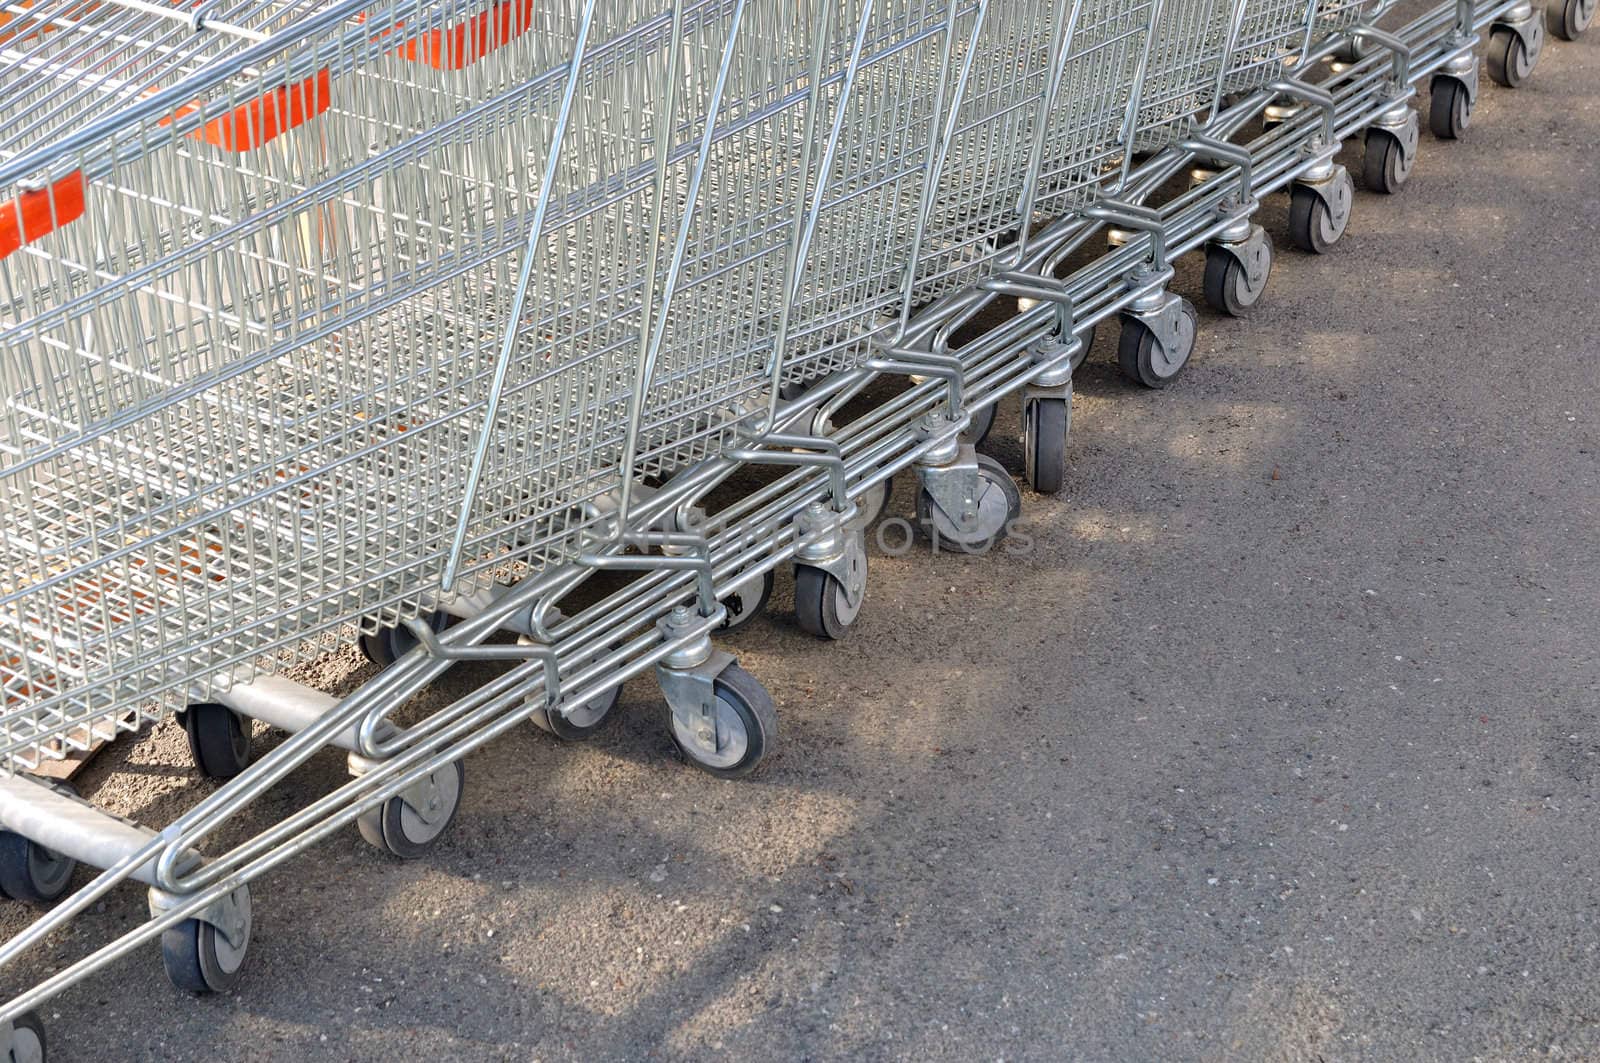 Row of metal shopping carts at supermarket parking